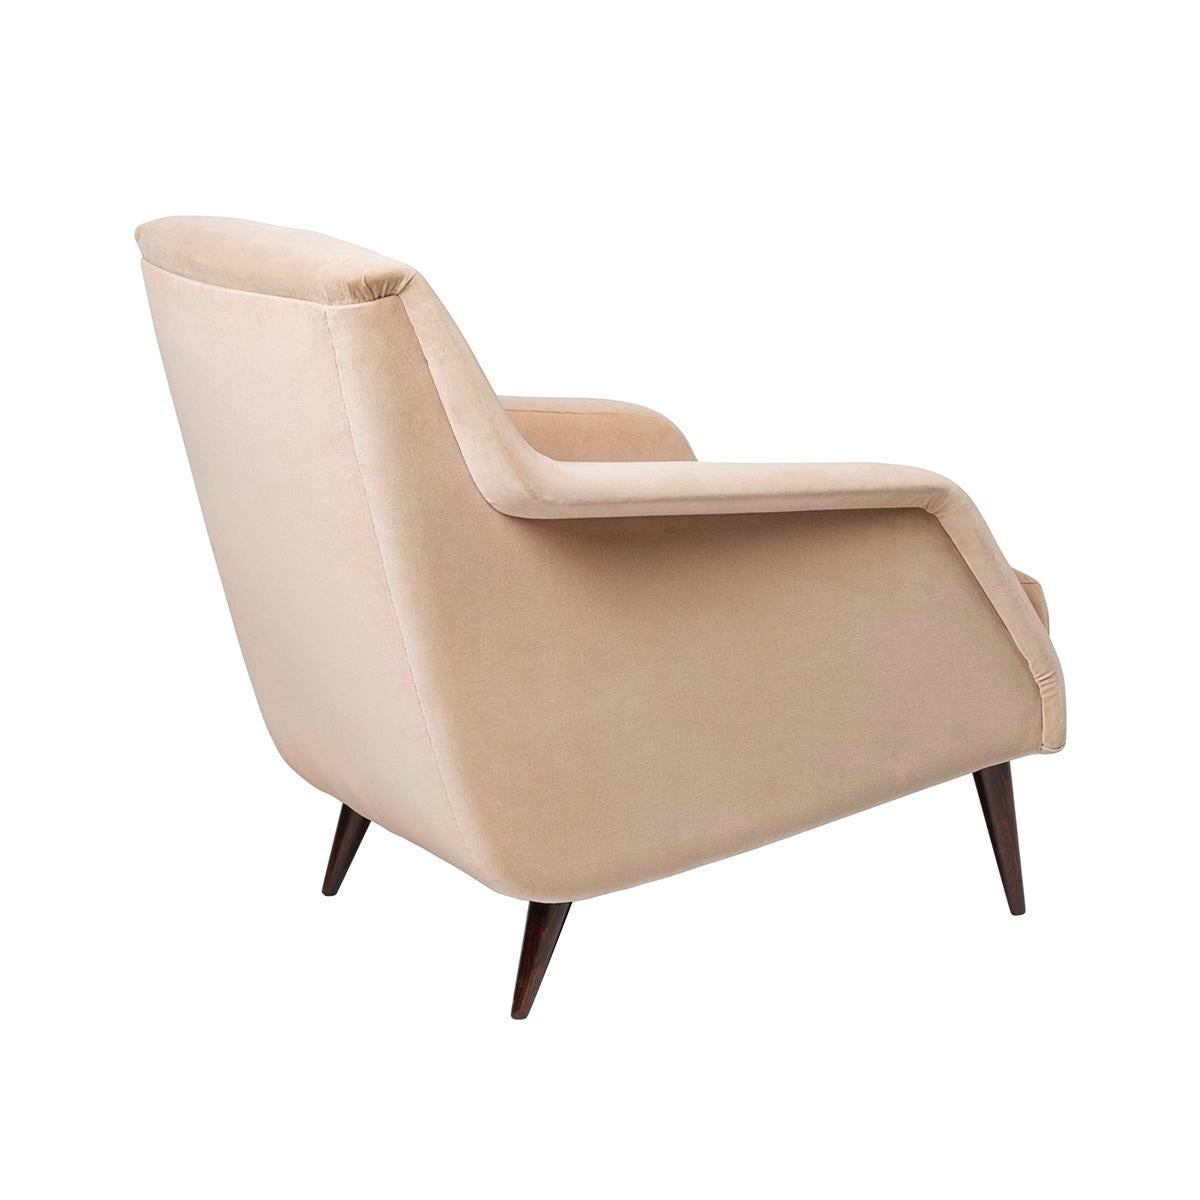 Danish Carlo de Carli Re-Edition Mid-Century Modern Lounge Chair